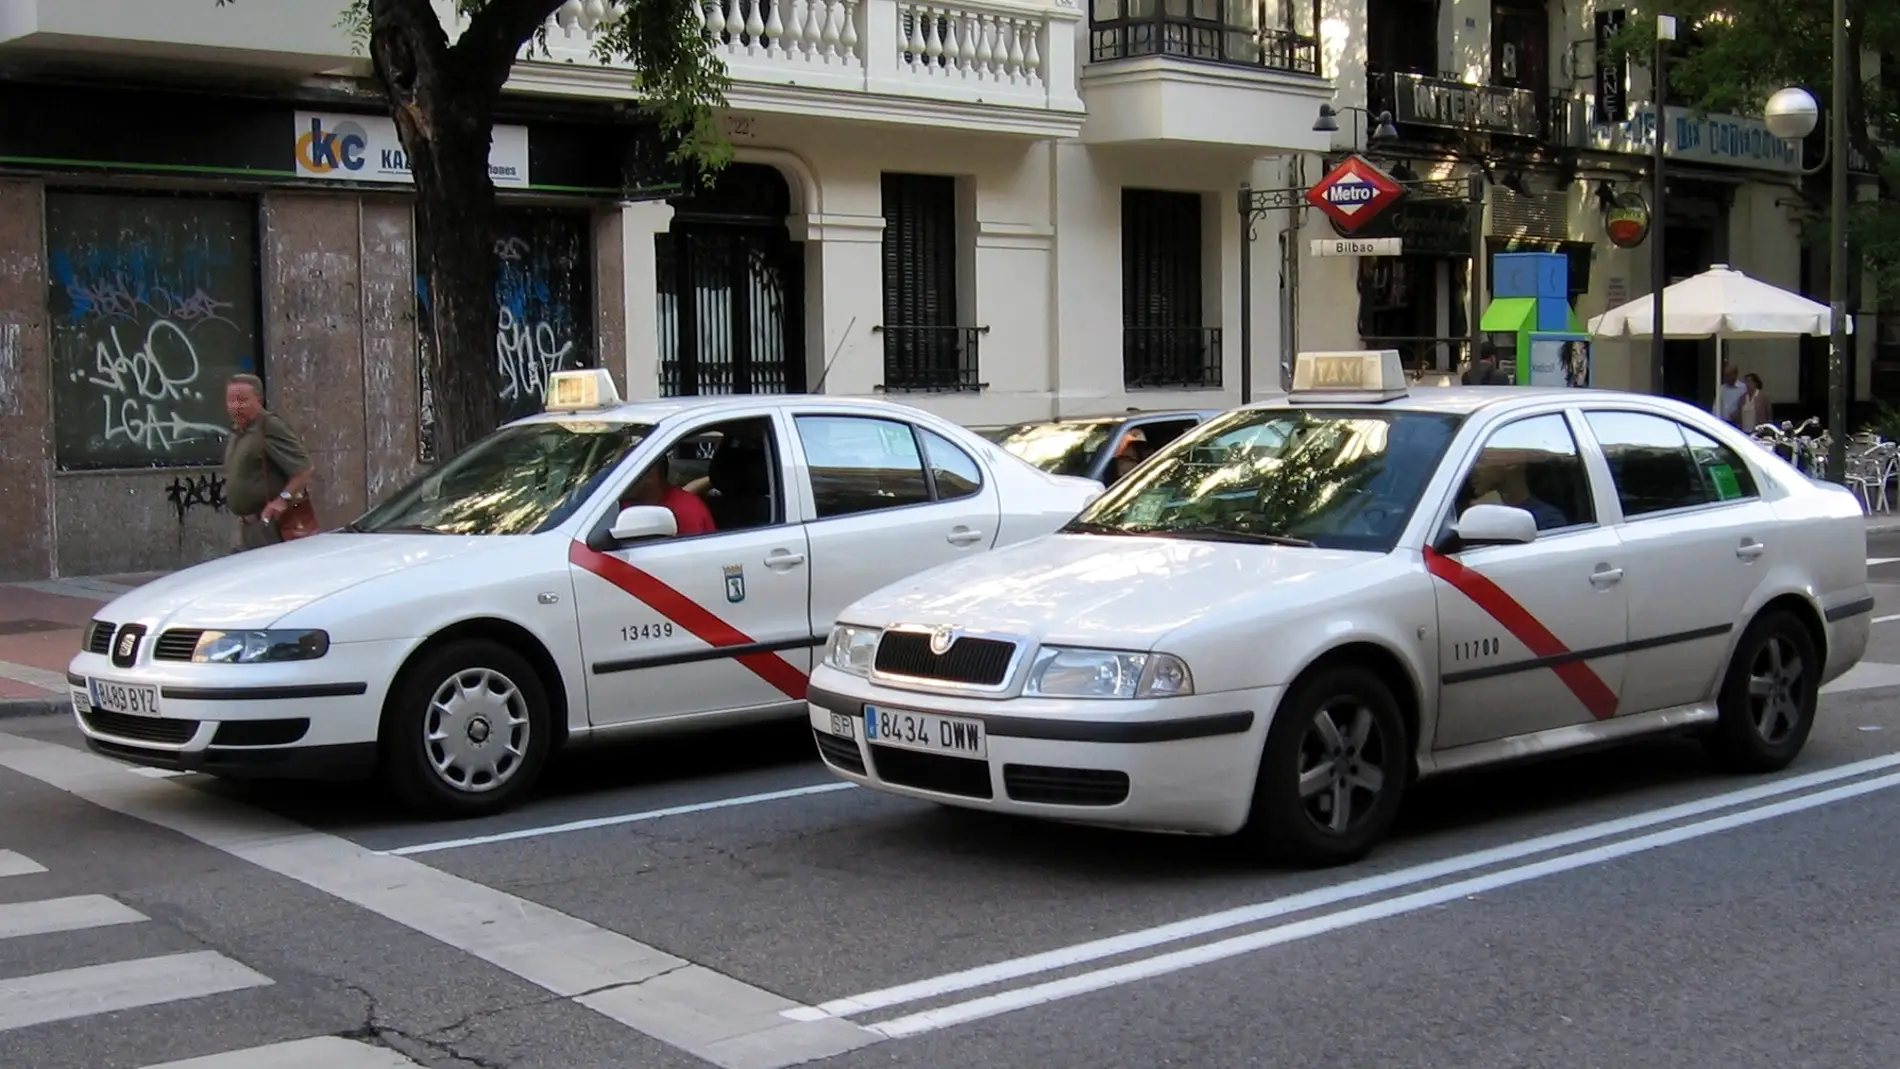 taxi-madrid-licencia-1117-01.jpg